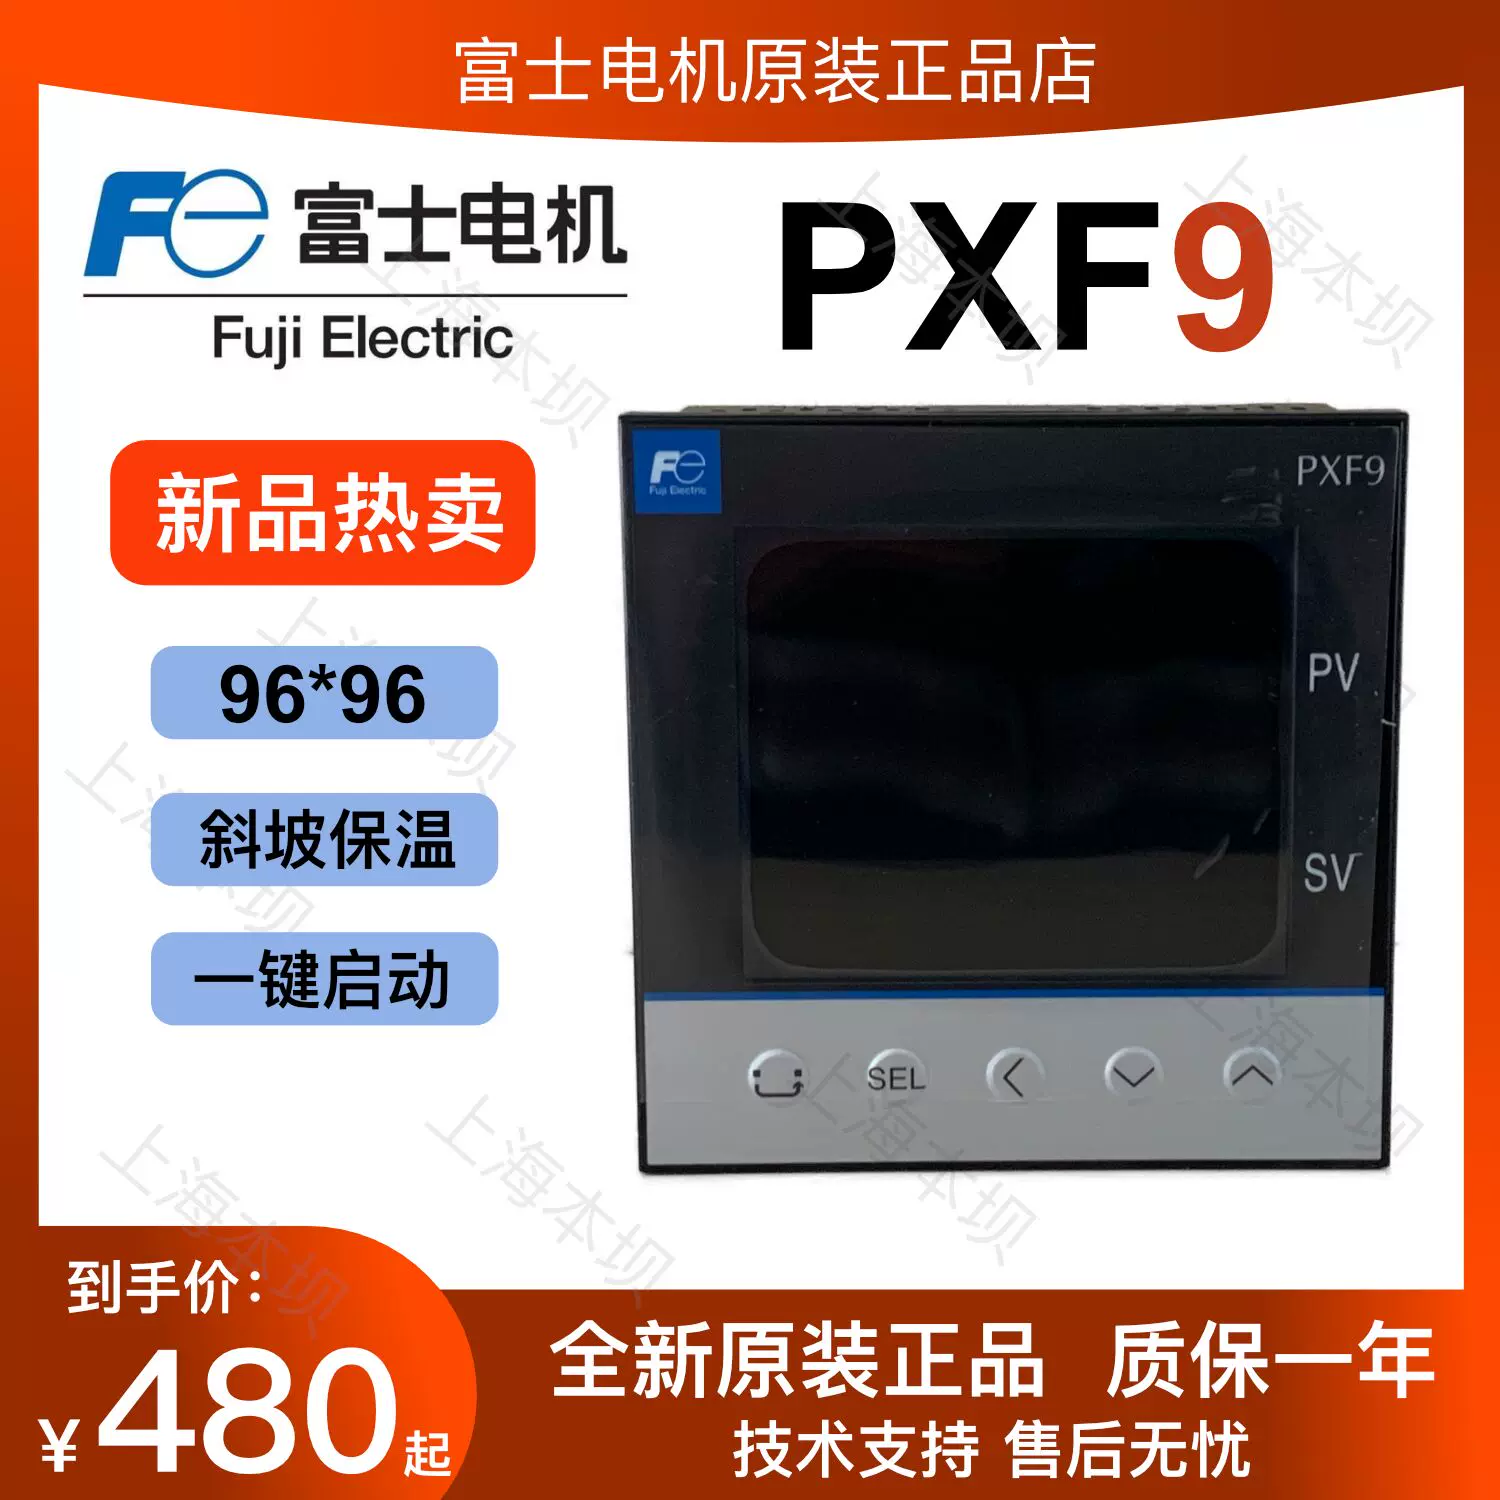 FE富士温控表PXF9控温精准/斜坡保温功能/一键启动/结束输出报警-Taobao